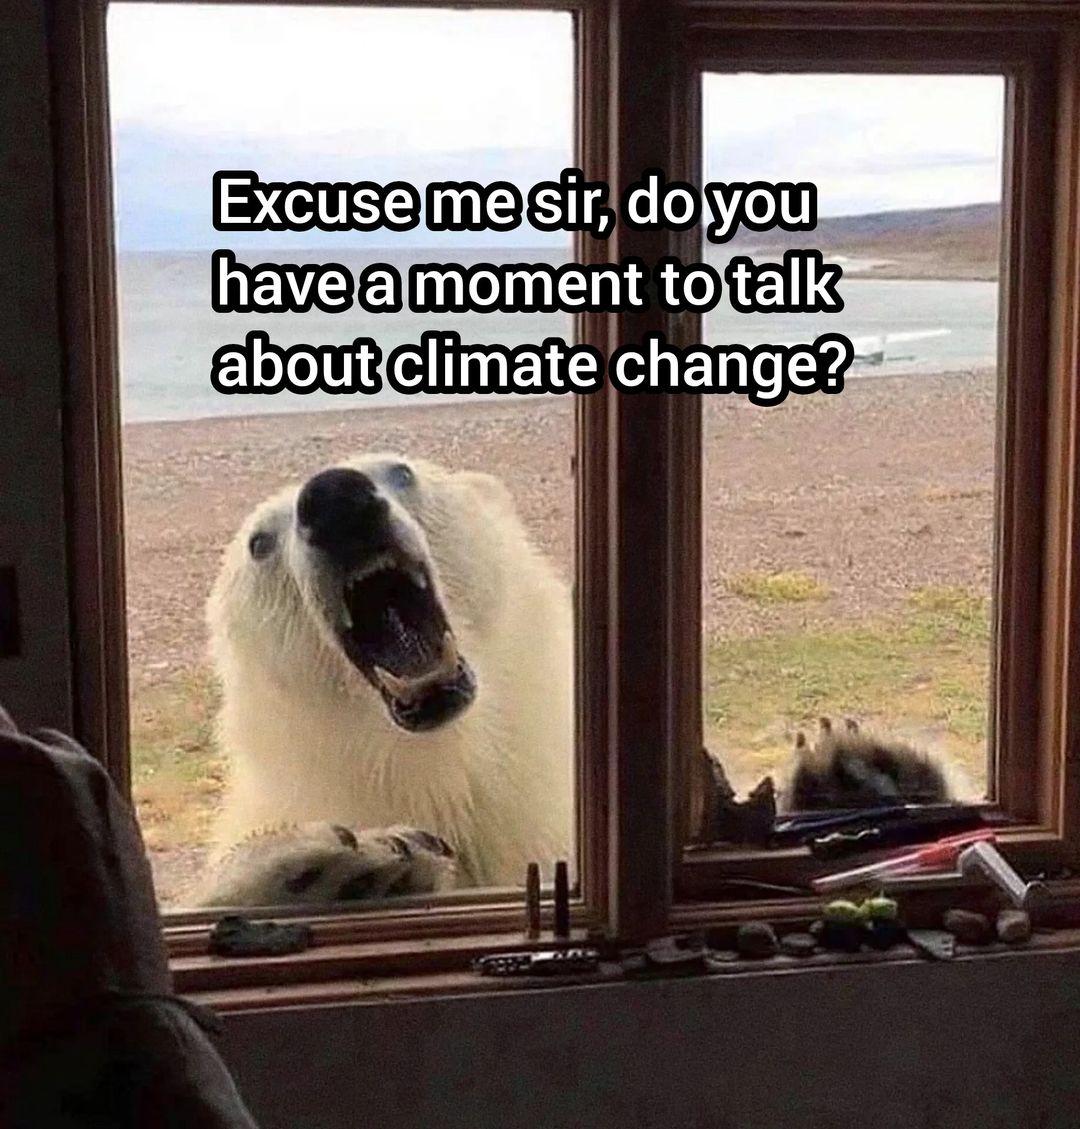 Excuse me...

#climate #climatechange #globalwarming #climatecrisis #ClimateAction #cleanenergy